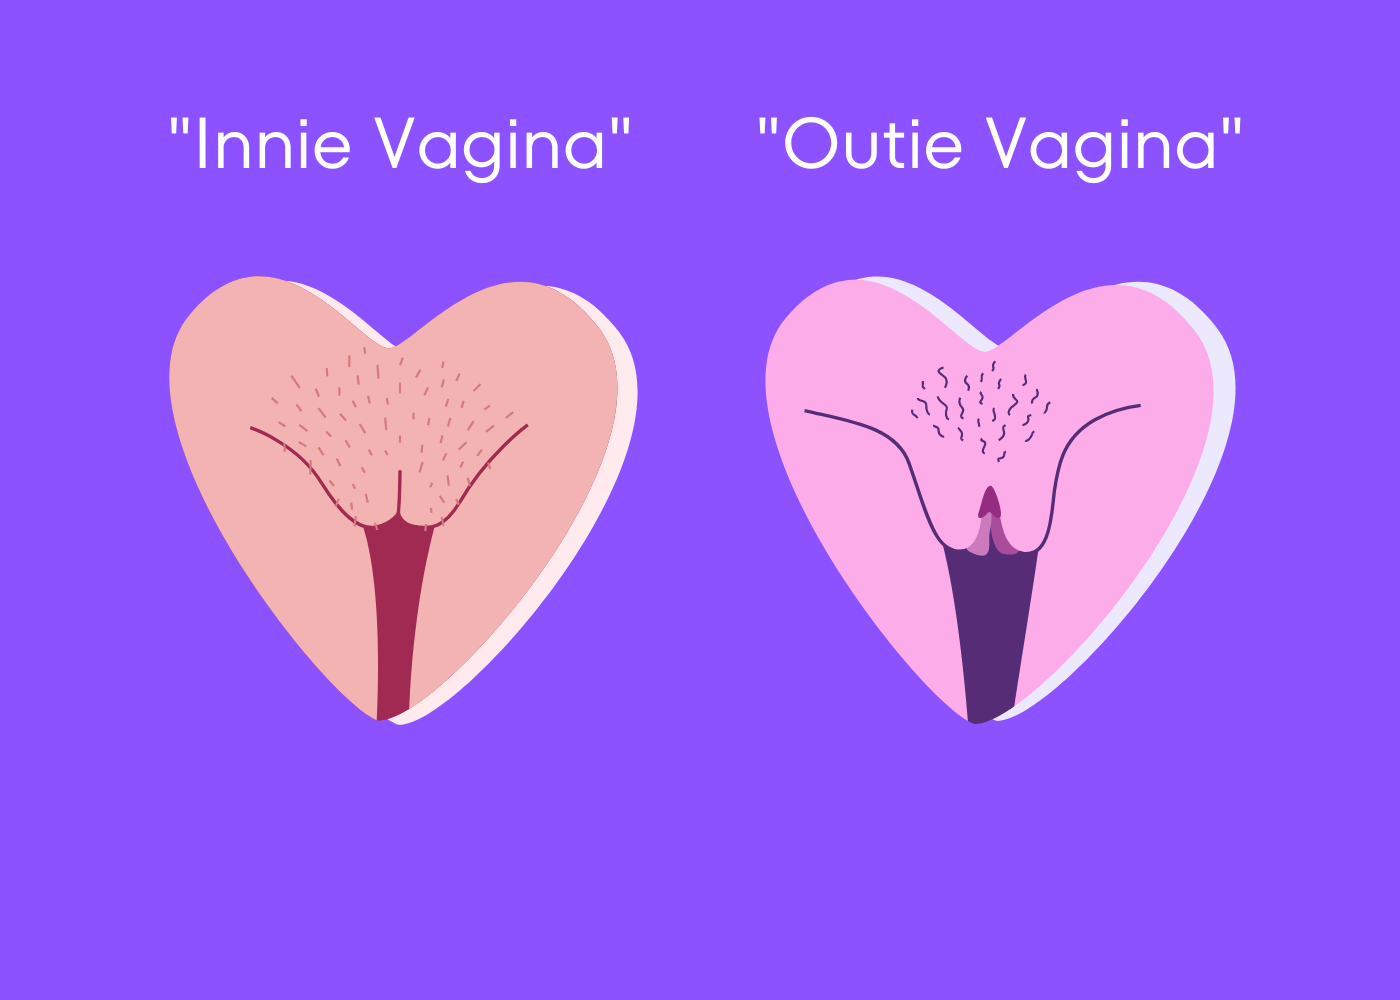 billie mac recommends innie vs outtie vagina pic